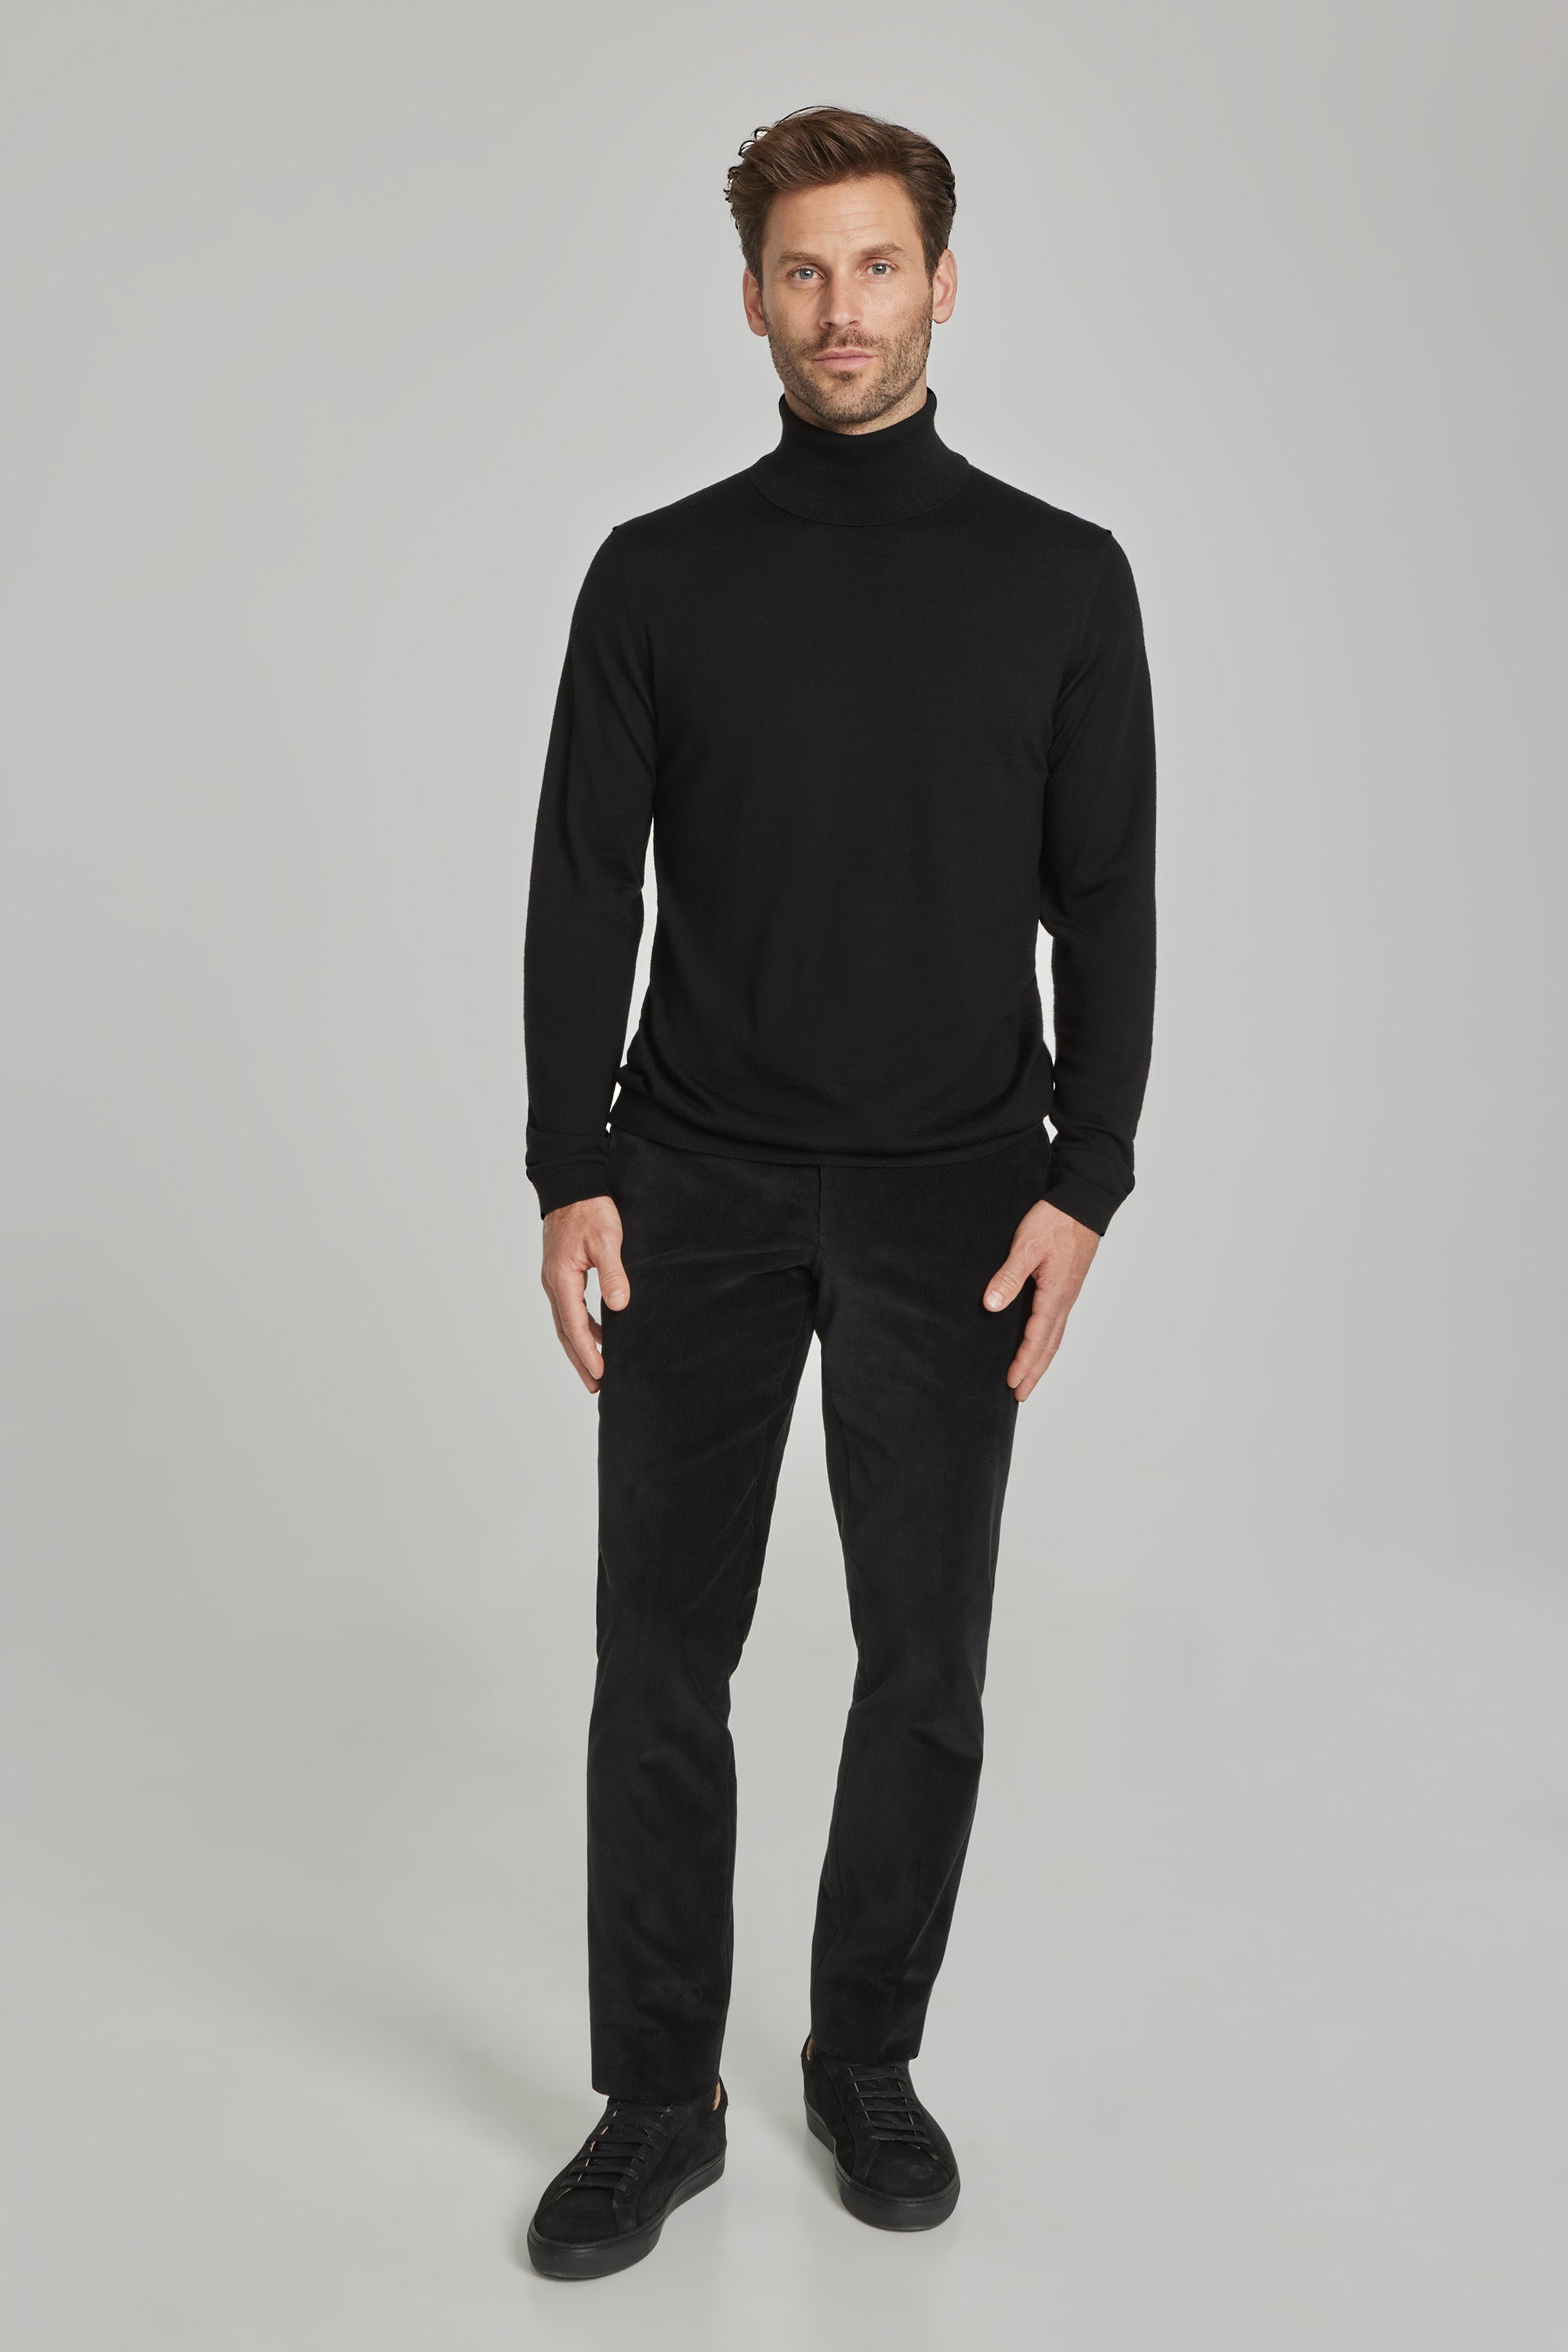 Image of Felix Solid Wool, Silk and Cashmere Turtleneck in Black-Jack Victor